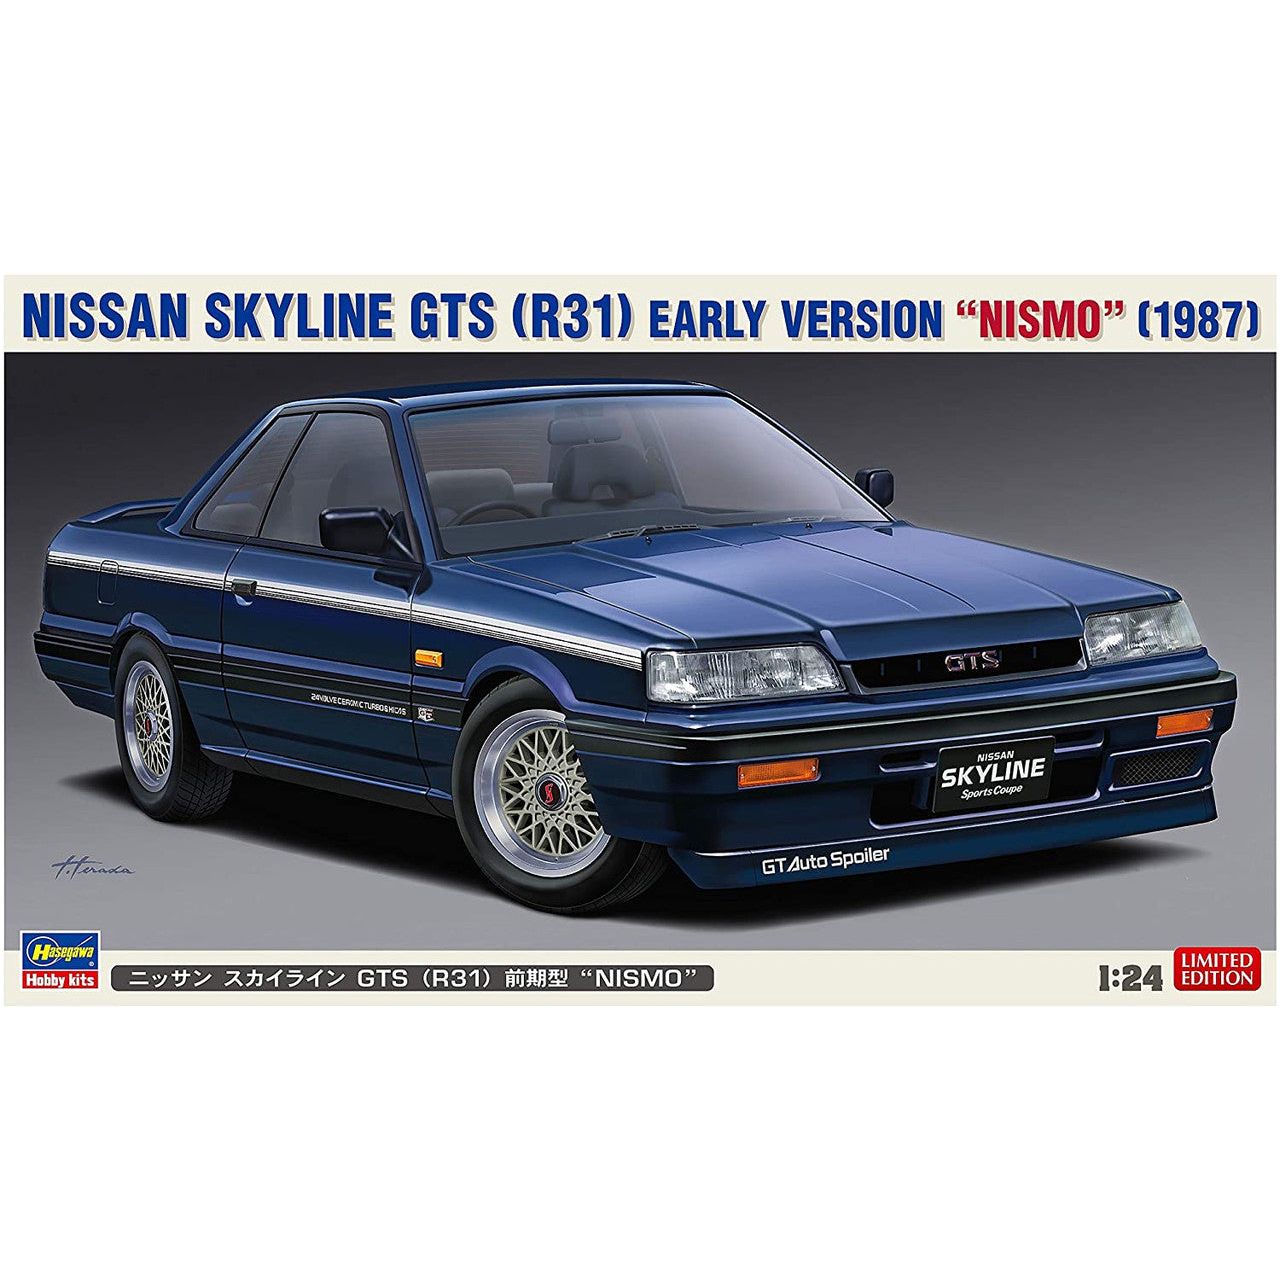 HASEGAWA 1/24 Nissan Skyline GTS (R31) Early Version "Nismo"